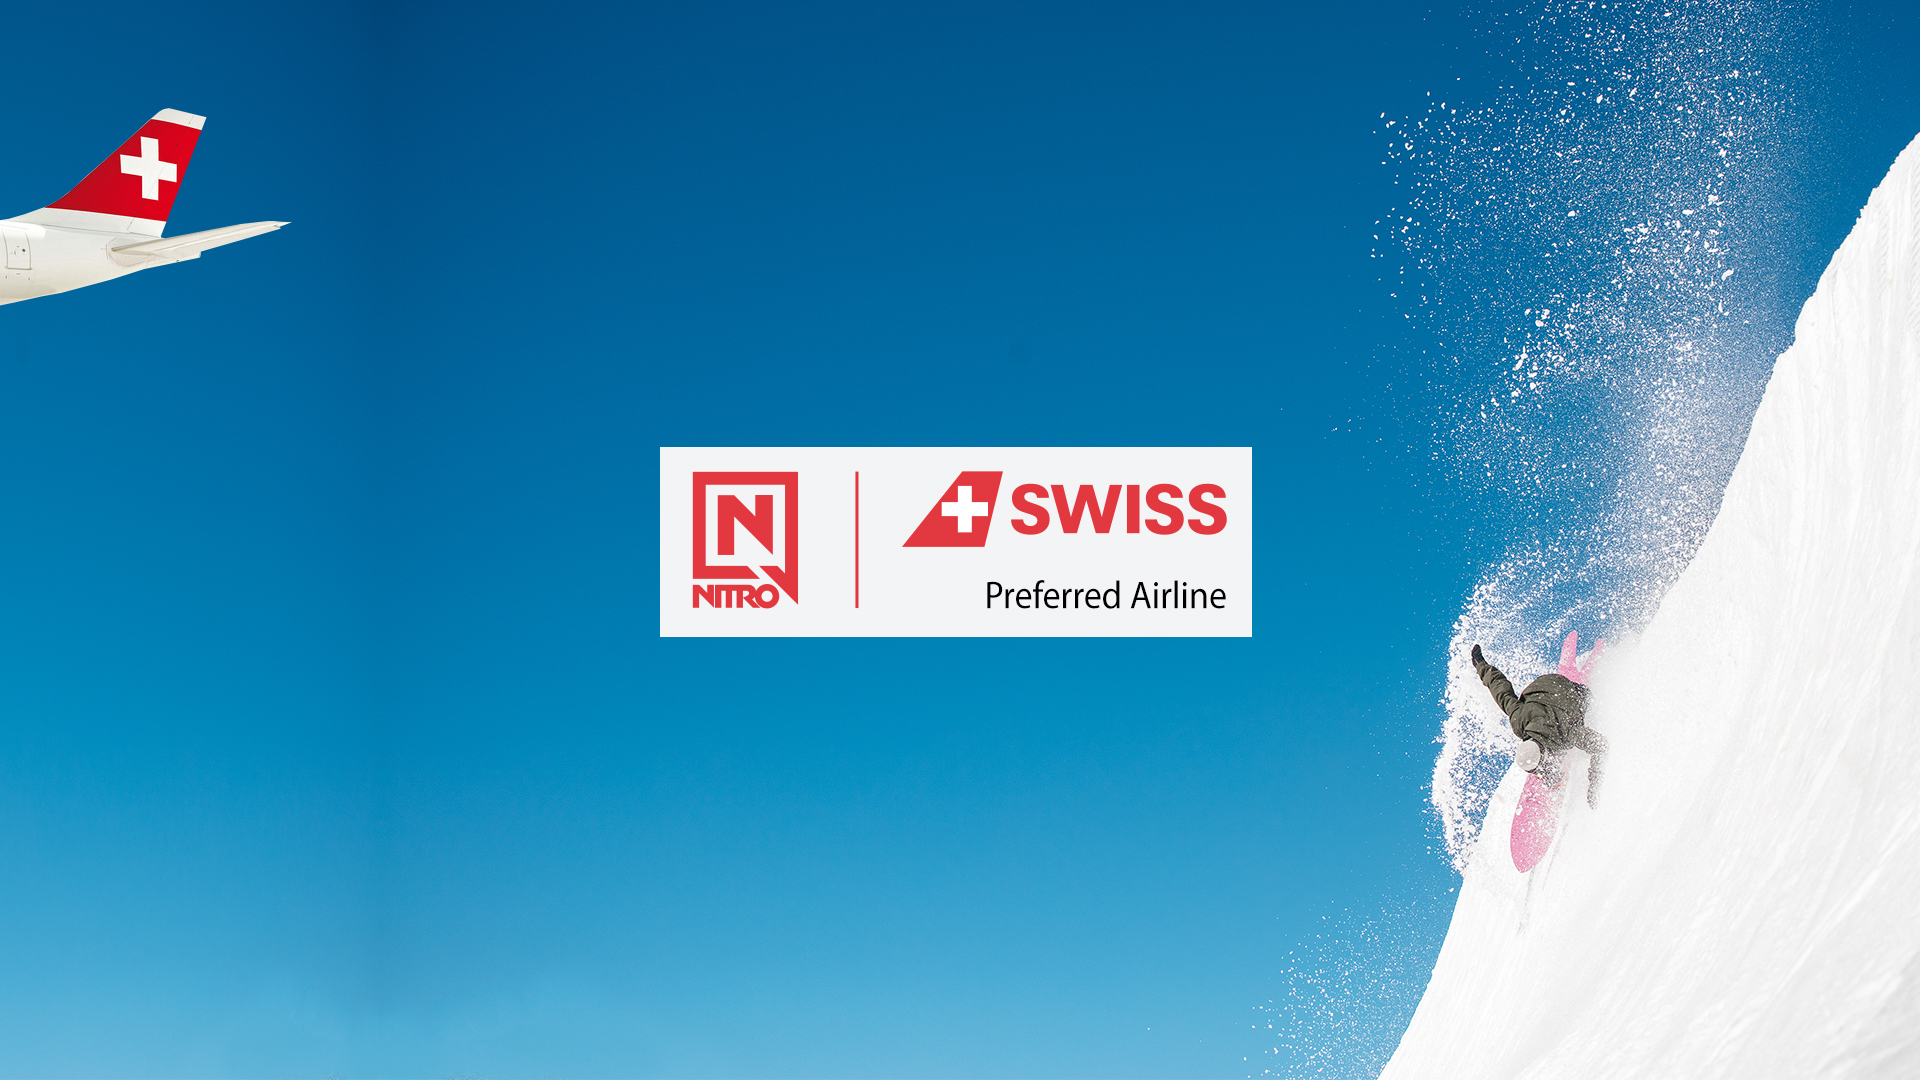 Nitro x Swiss Press Release Image